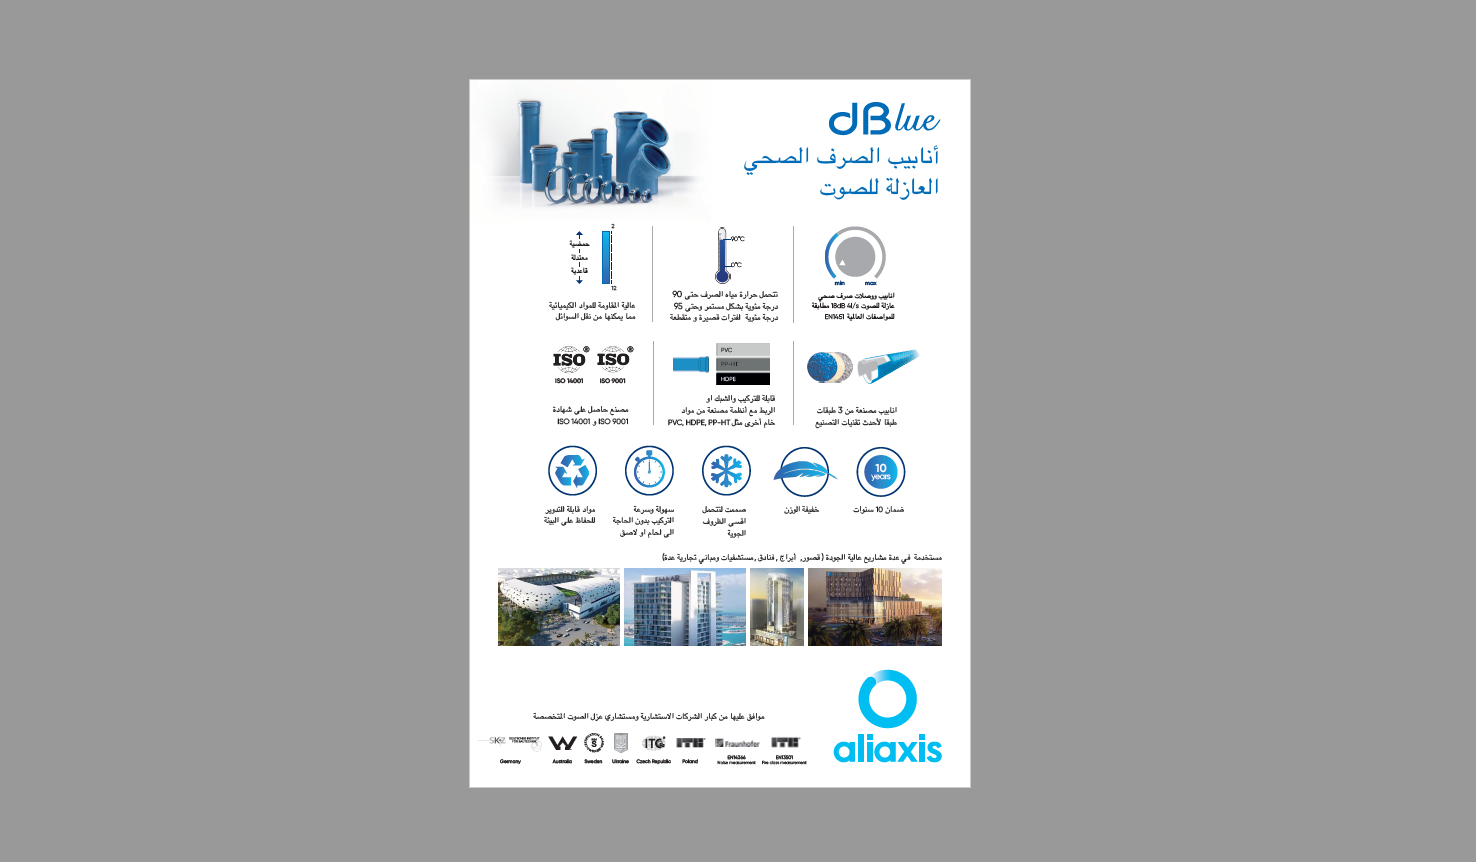 dBlue Arabic Information Leaflet